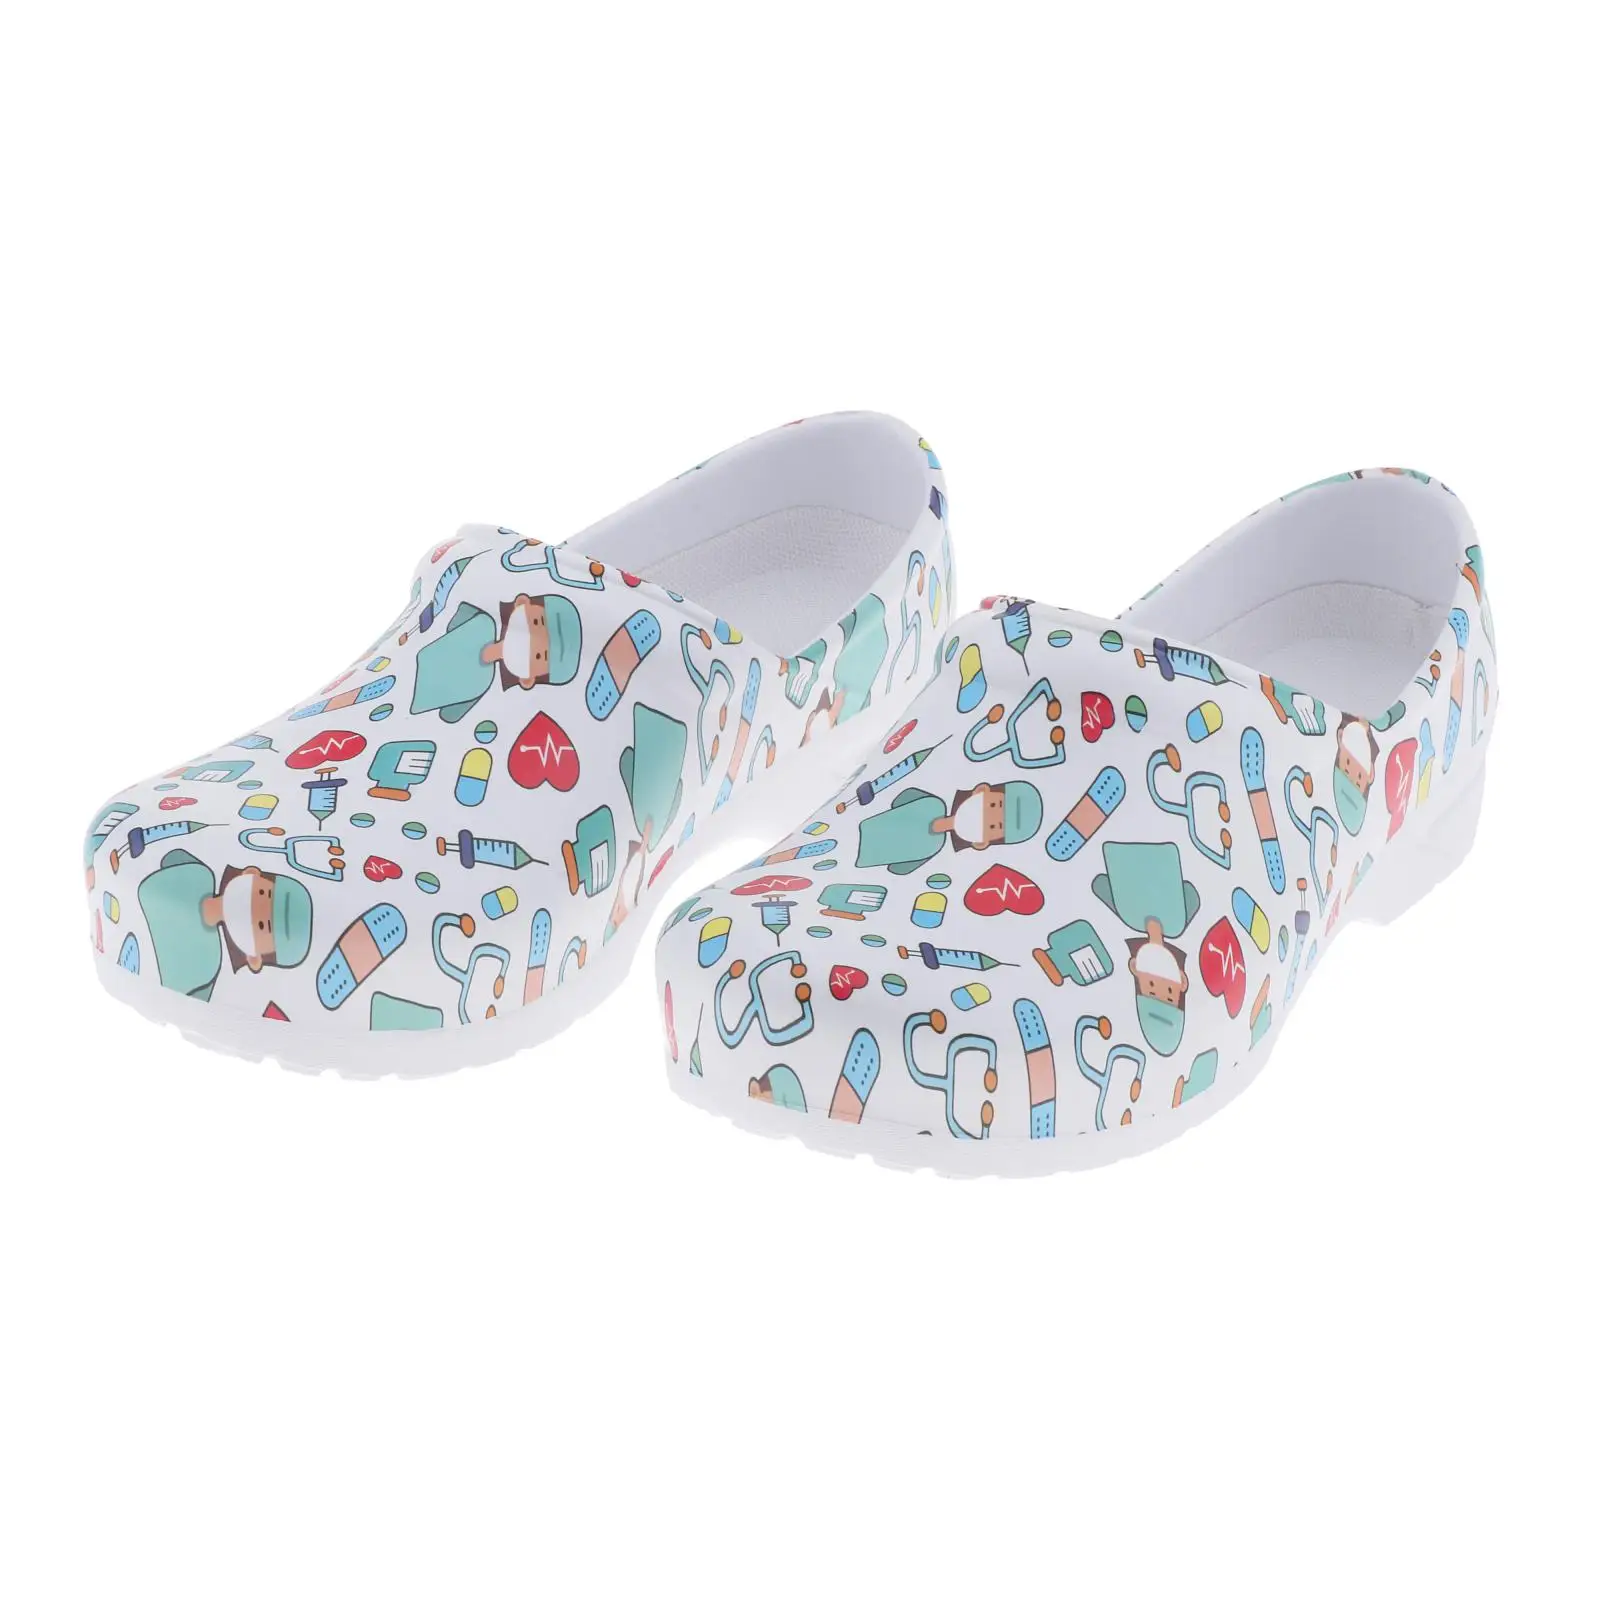 Nursing Shoes Clog for Women Garden Shoes Lightweight Casual Slipers Sandals